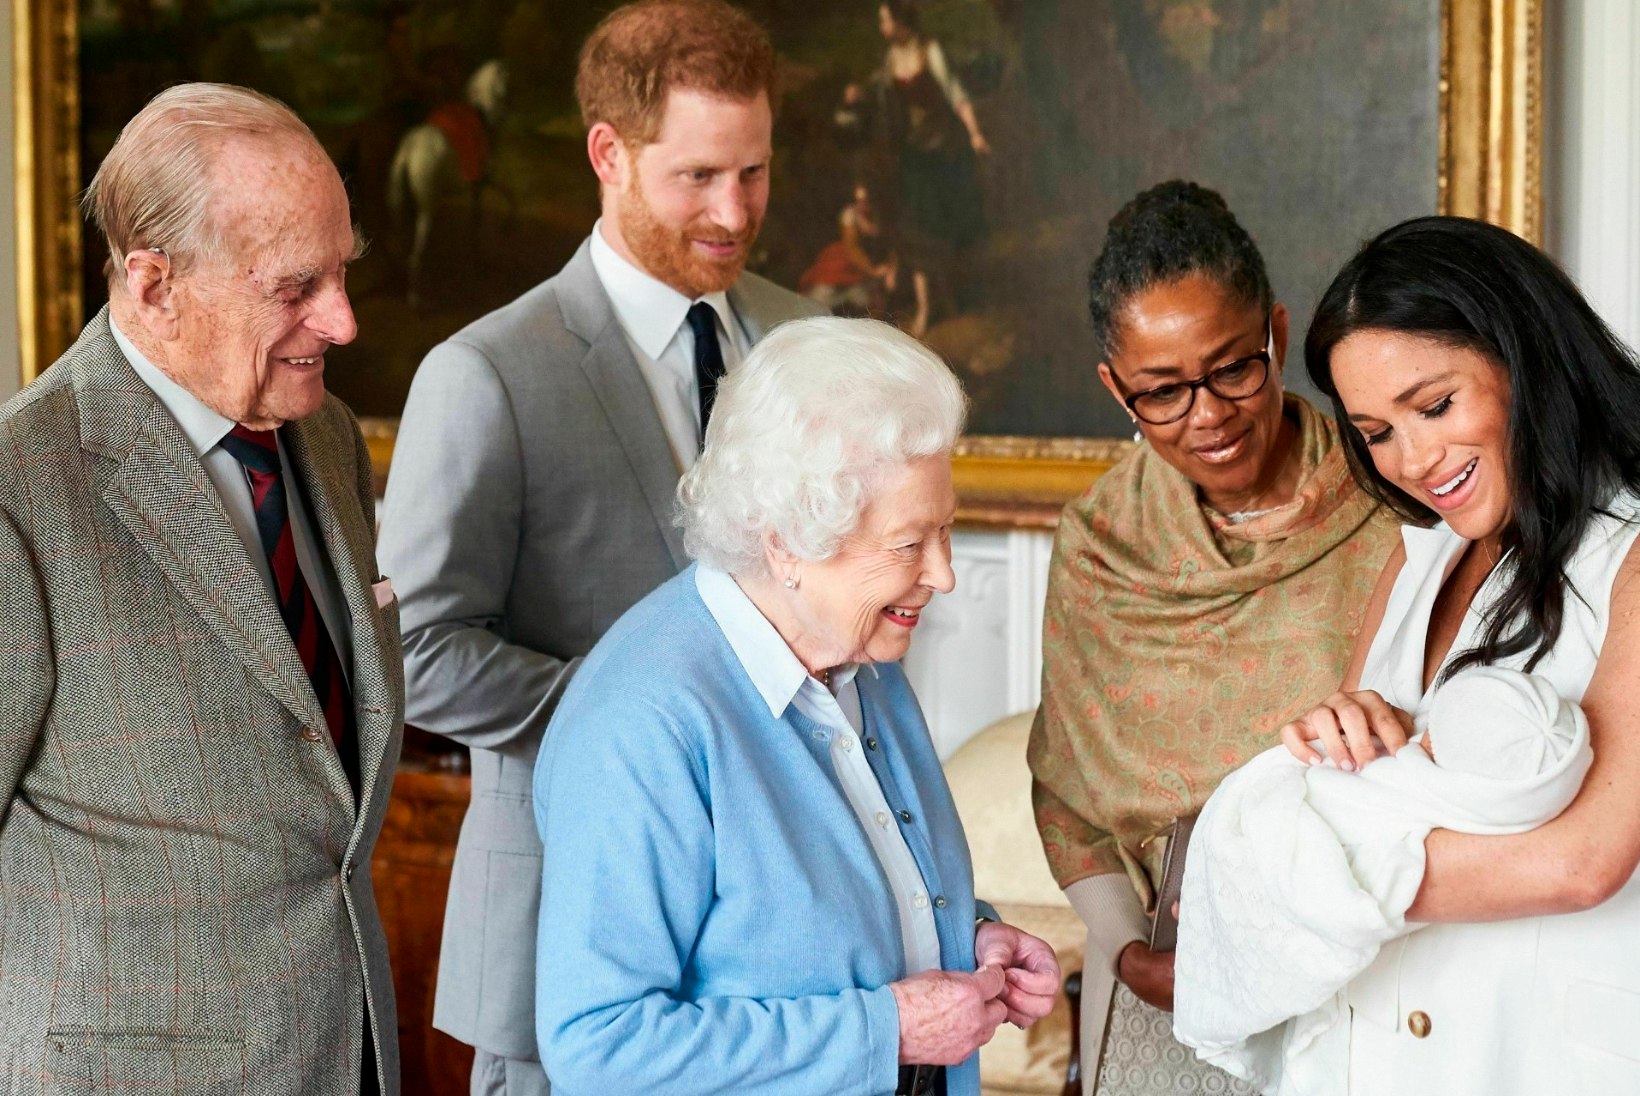 Kuninganna Elizabeth II ei osale pisi-Archie ristimisel